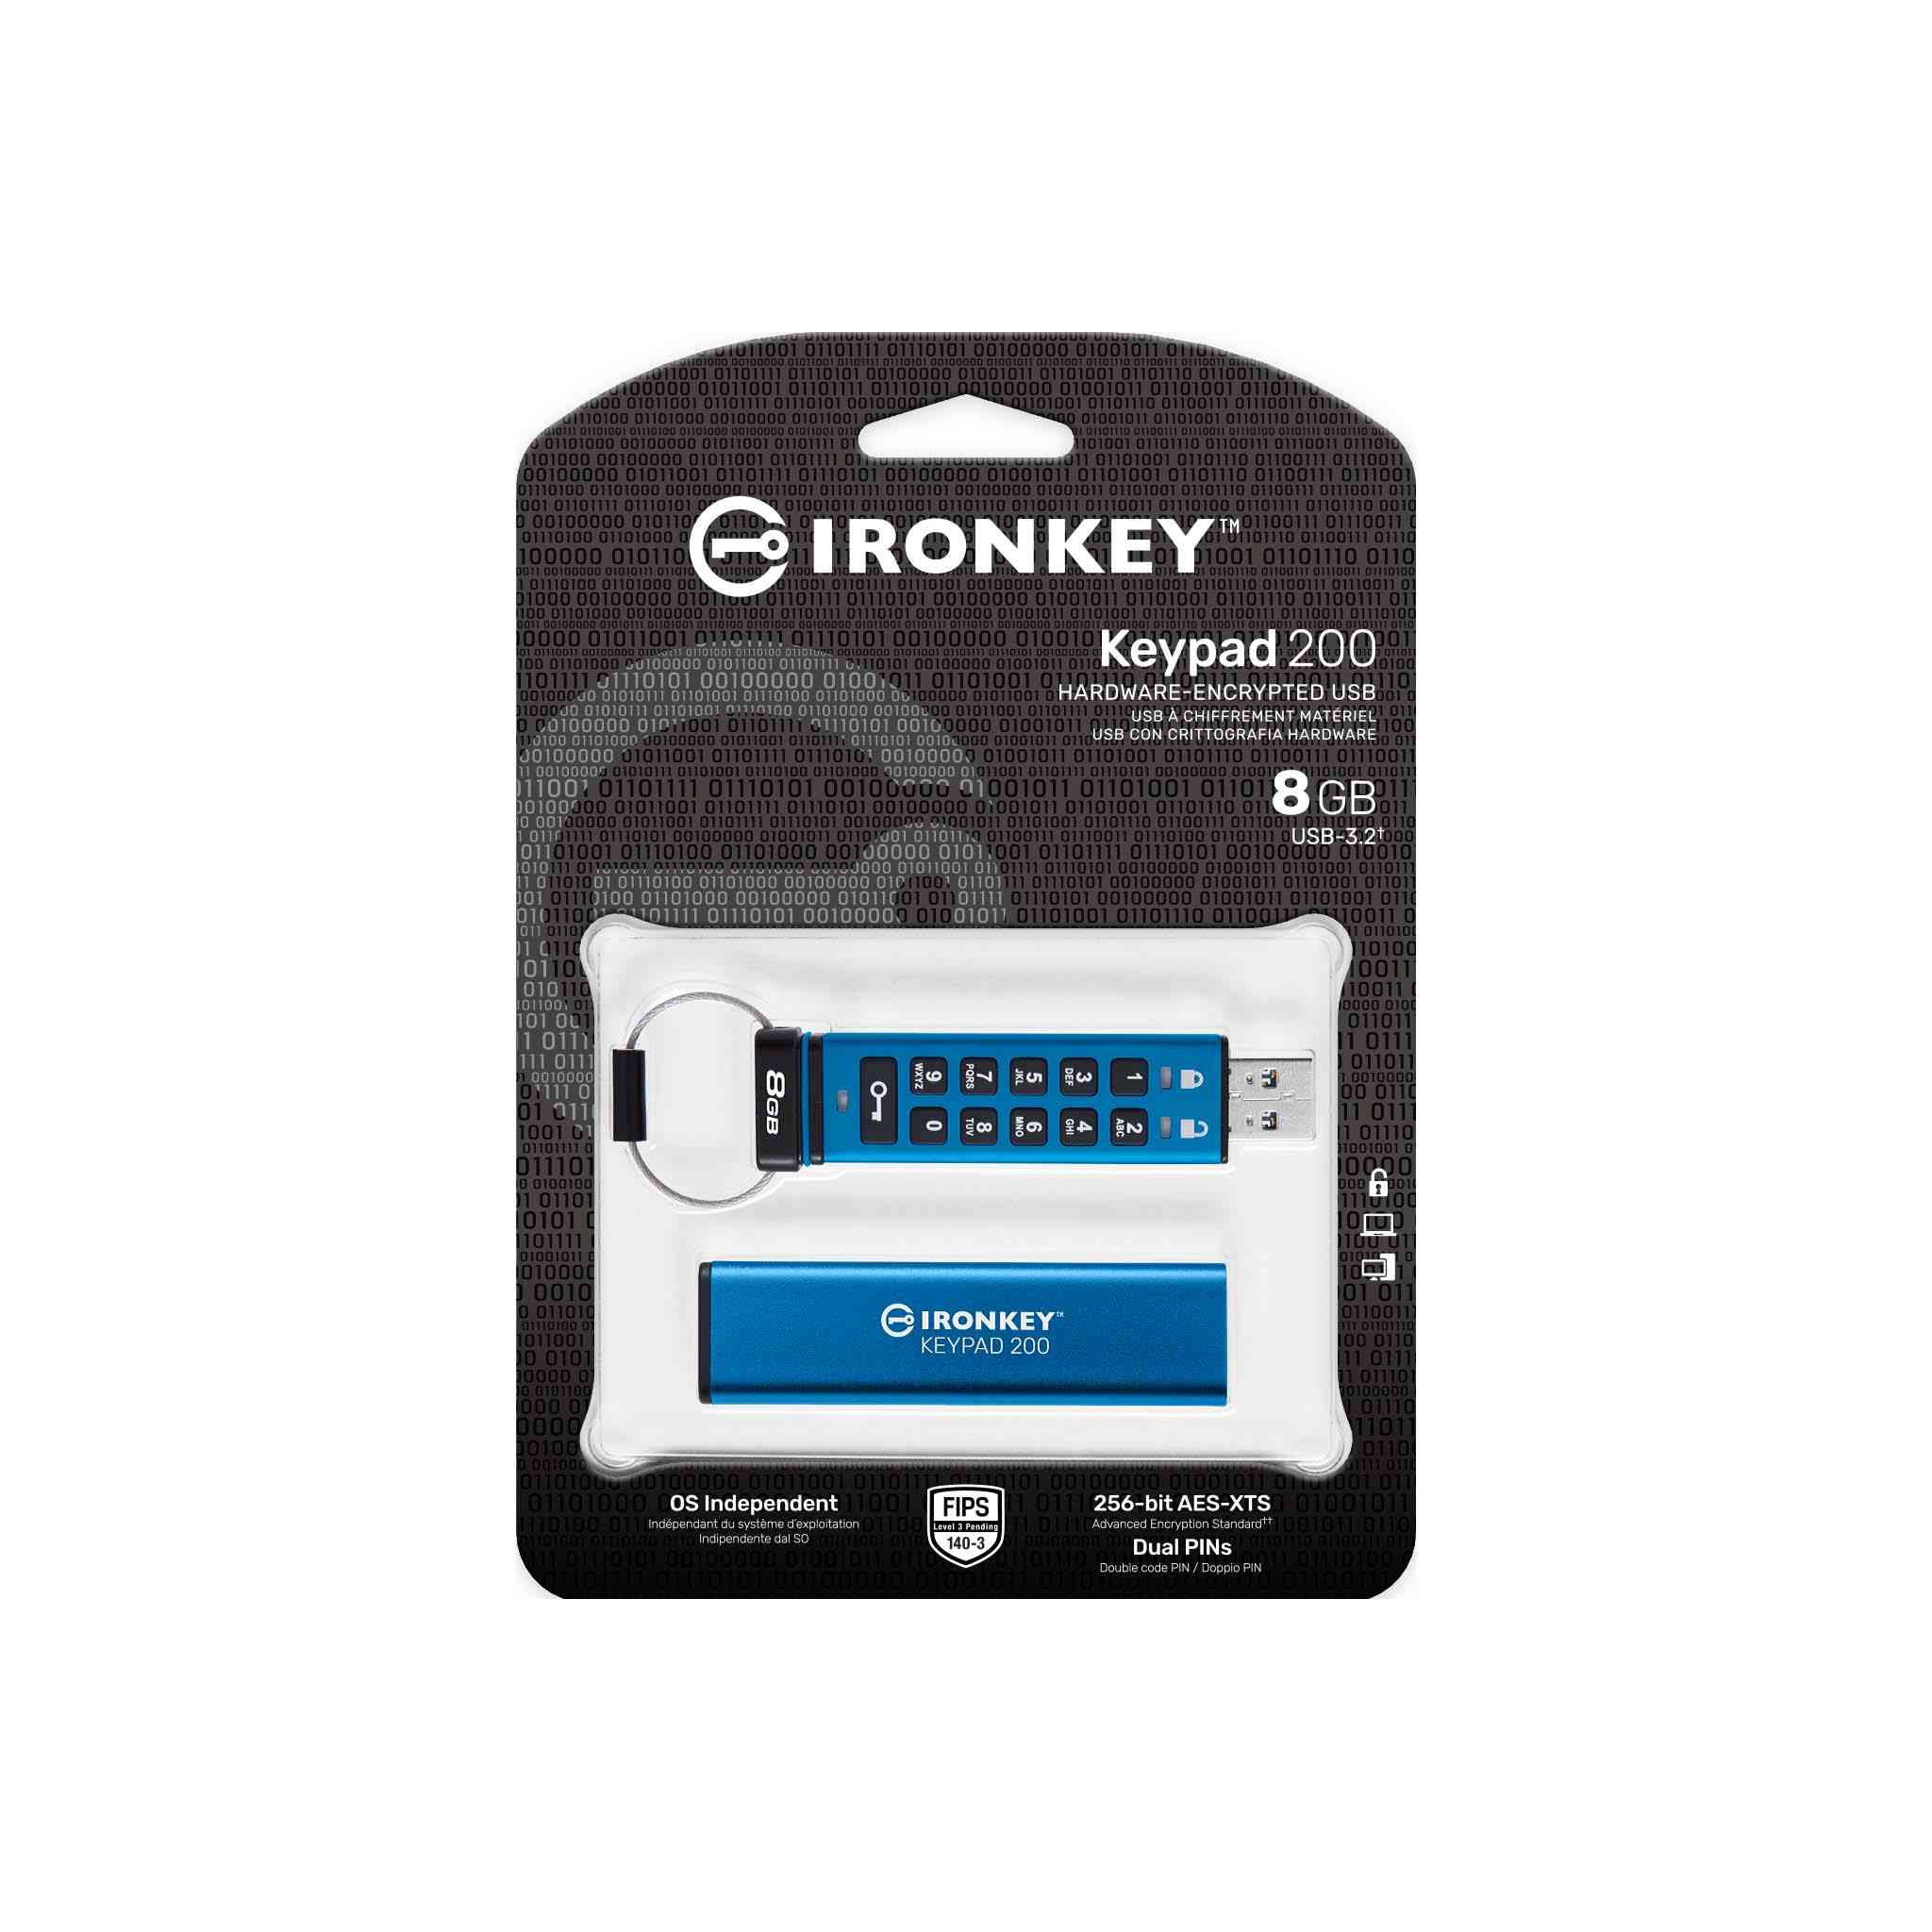 Kingston IronKey Keypad 200, unidad USB flash codificada por hardware